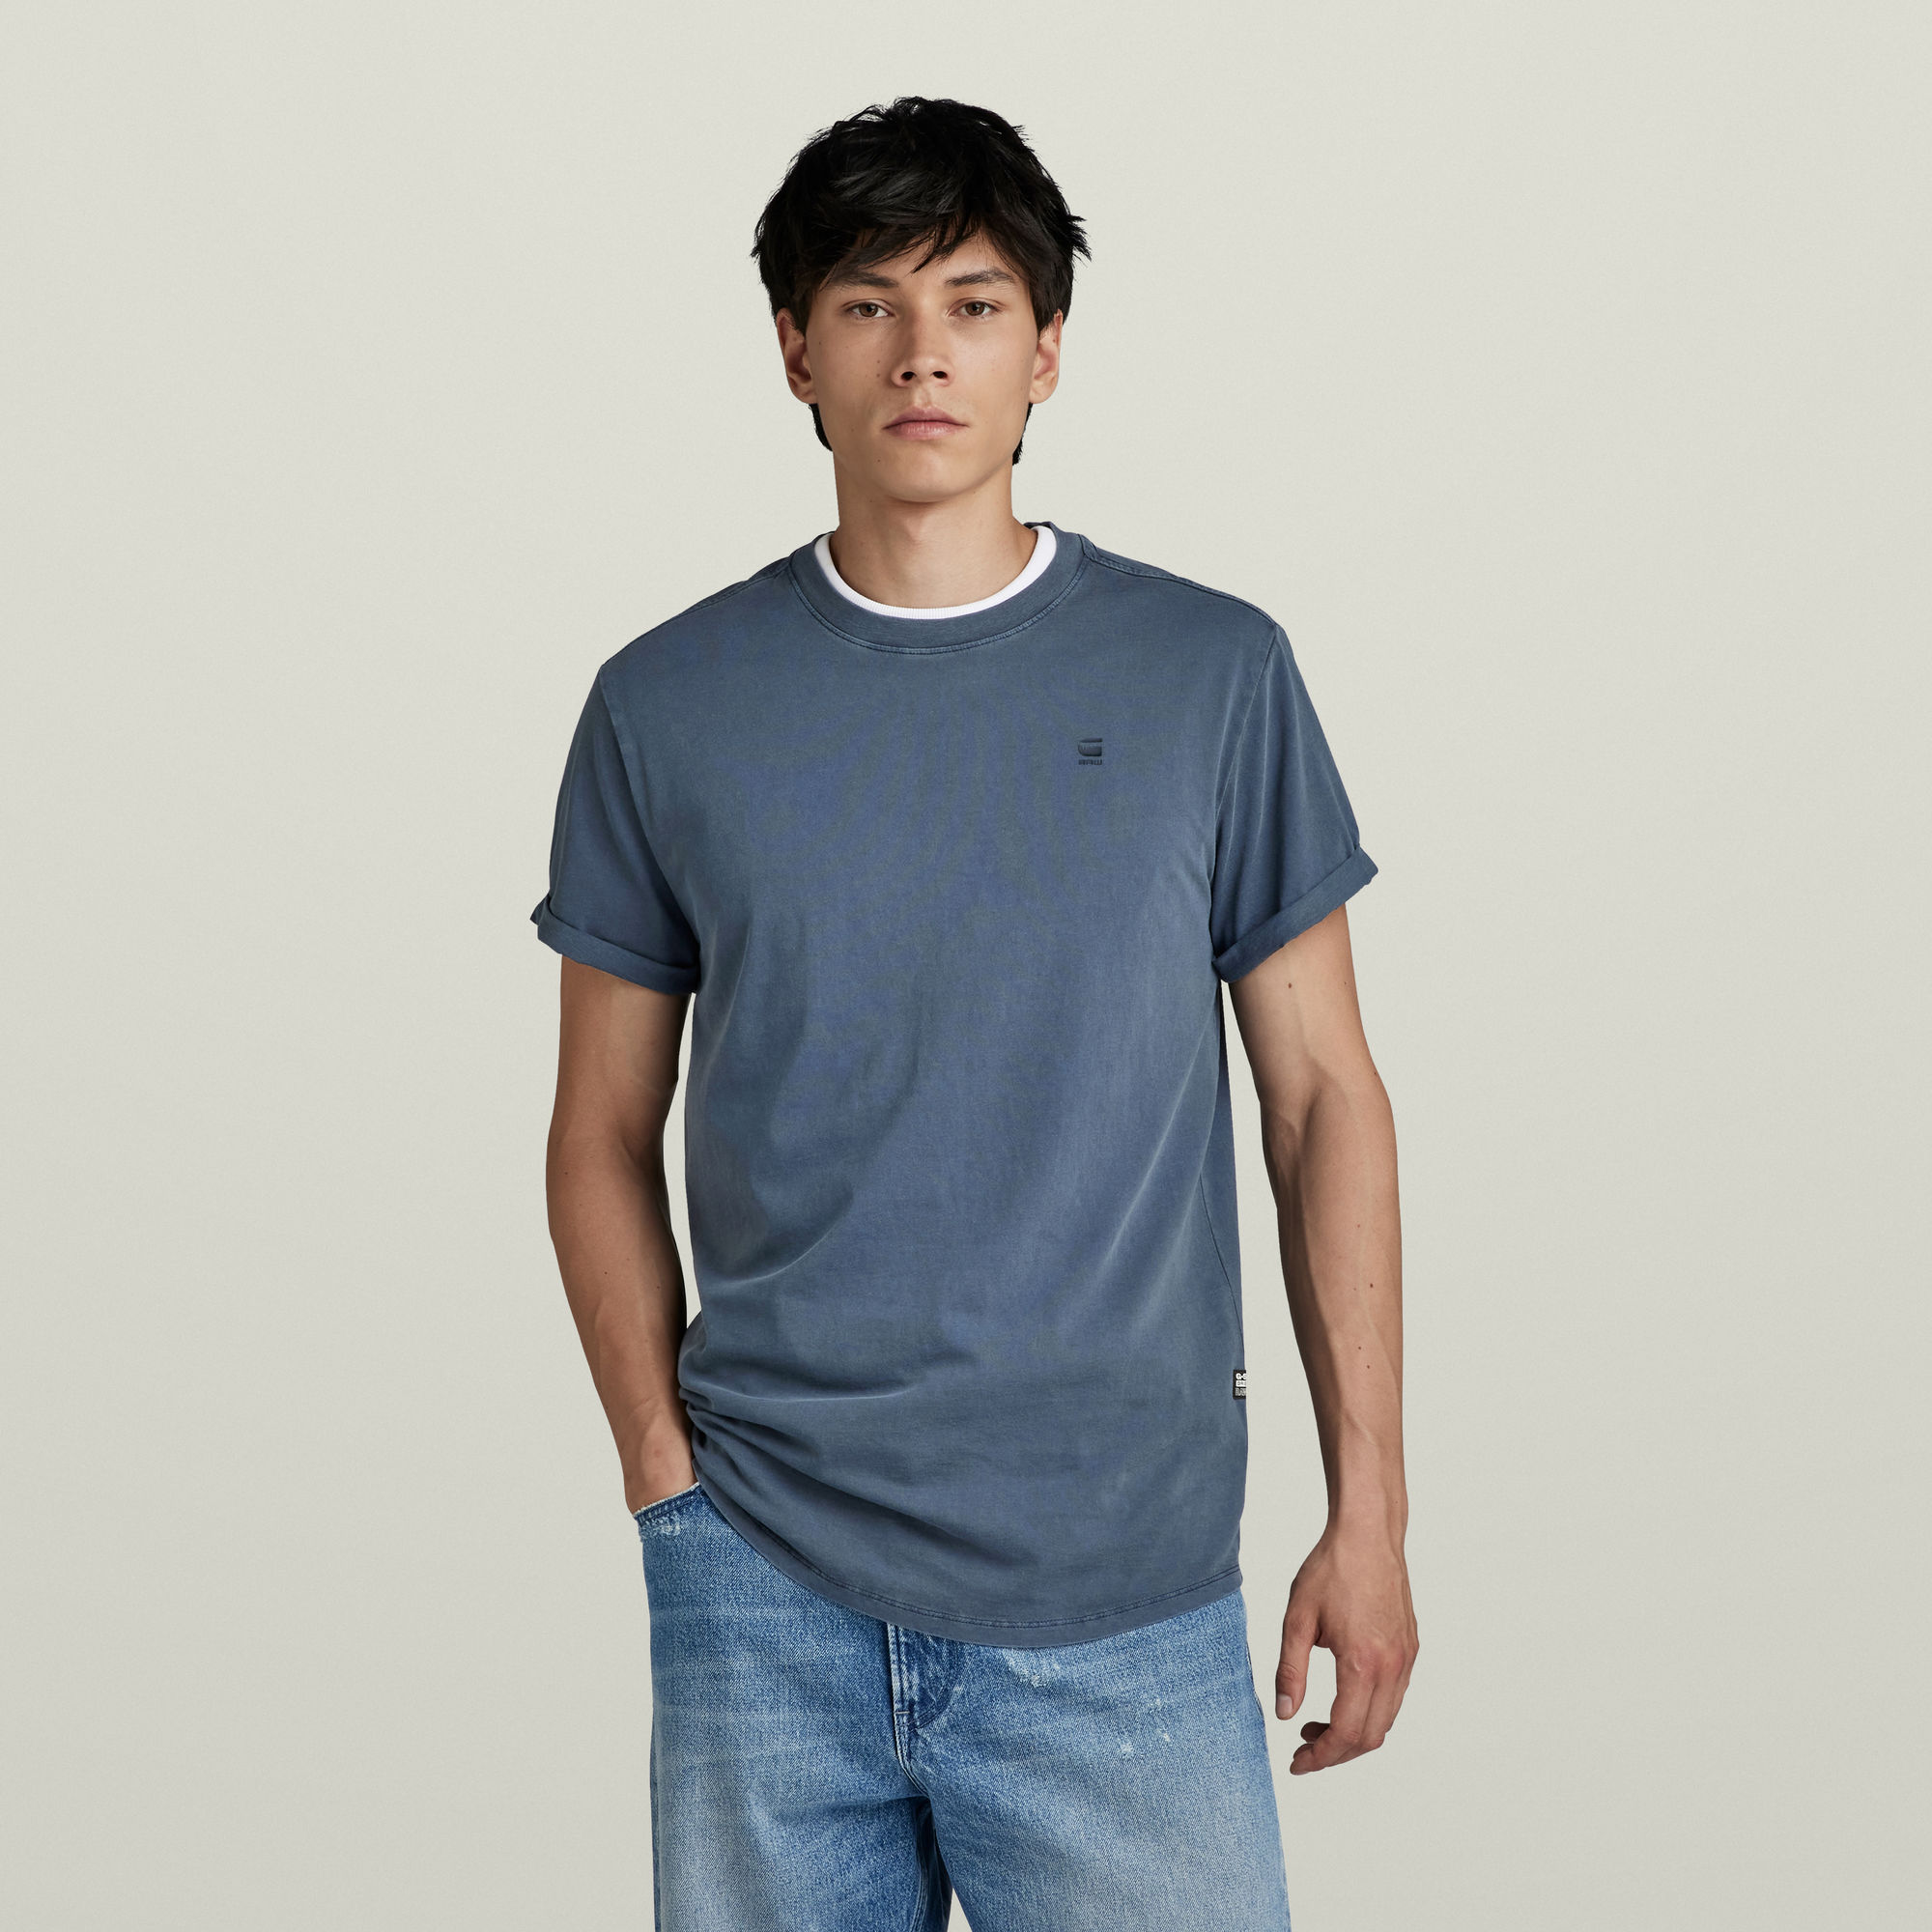 

Lash T-Shirt - Dark blue - Men